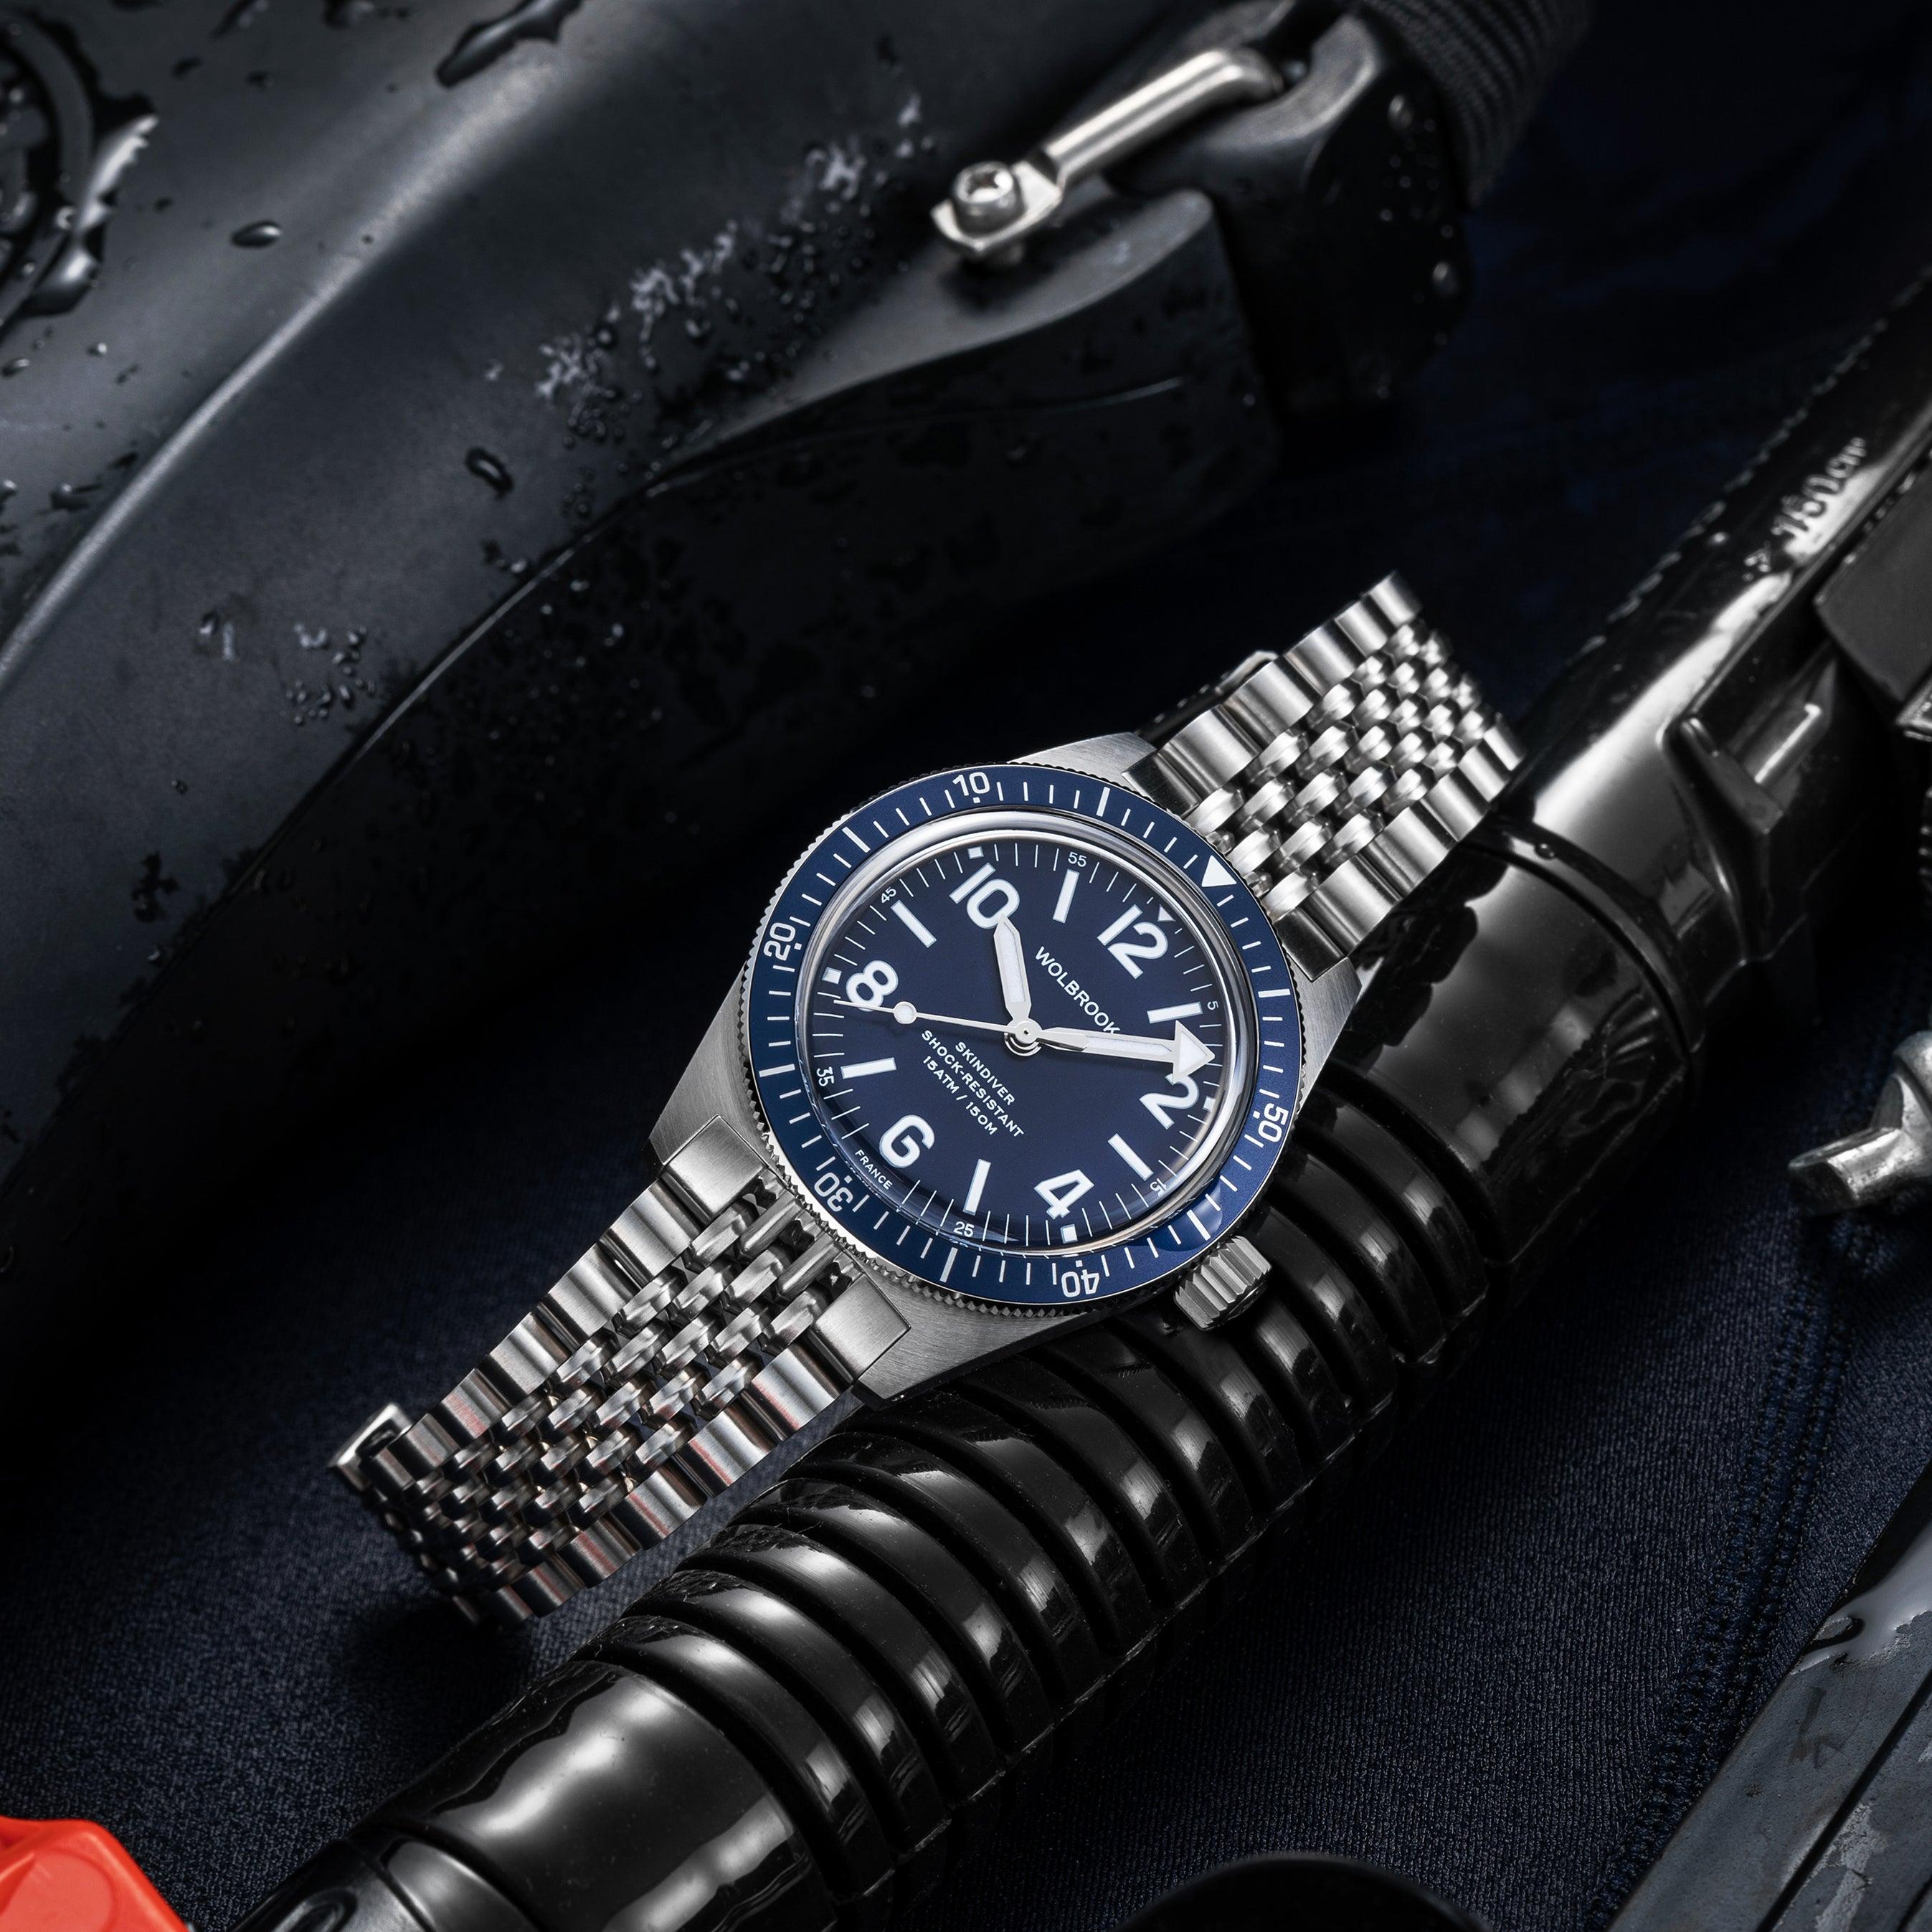 Skindiver Automatic Bracelet Watch - Blue